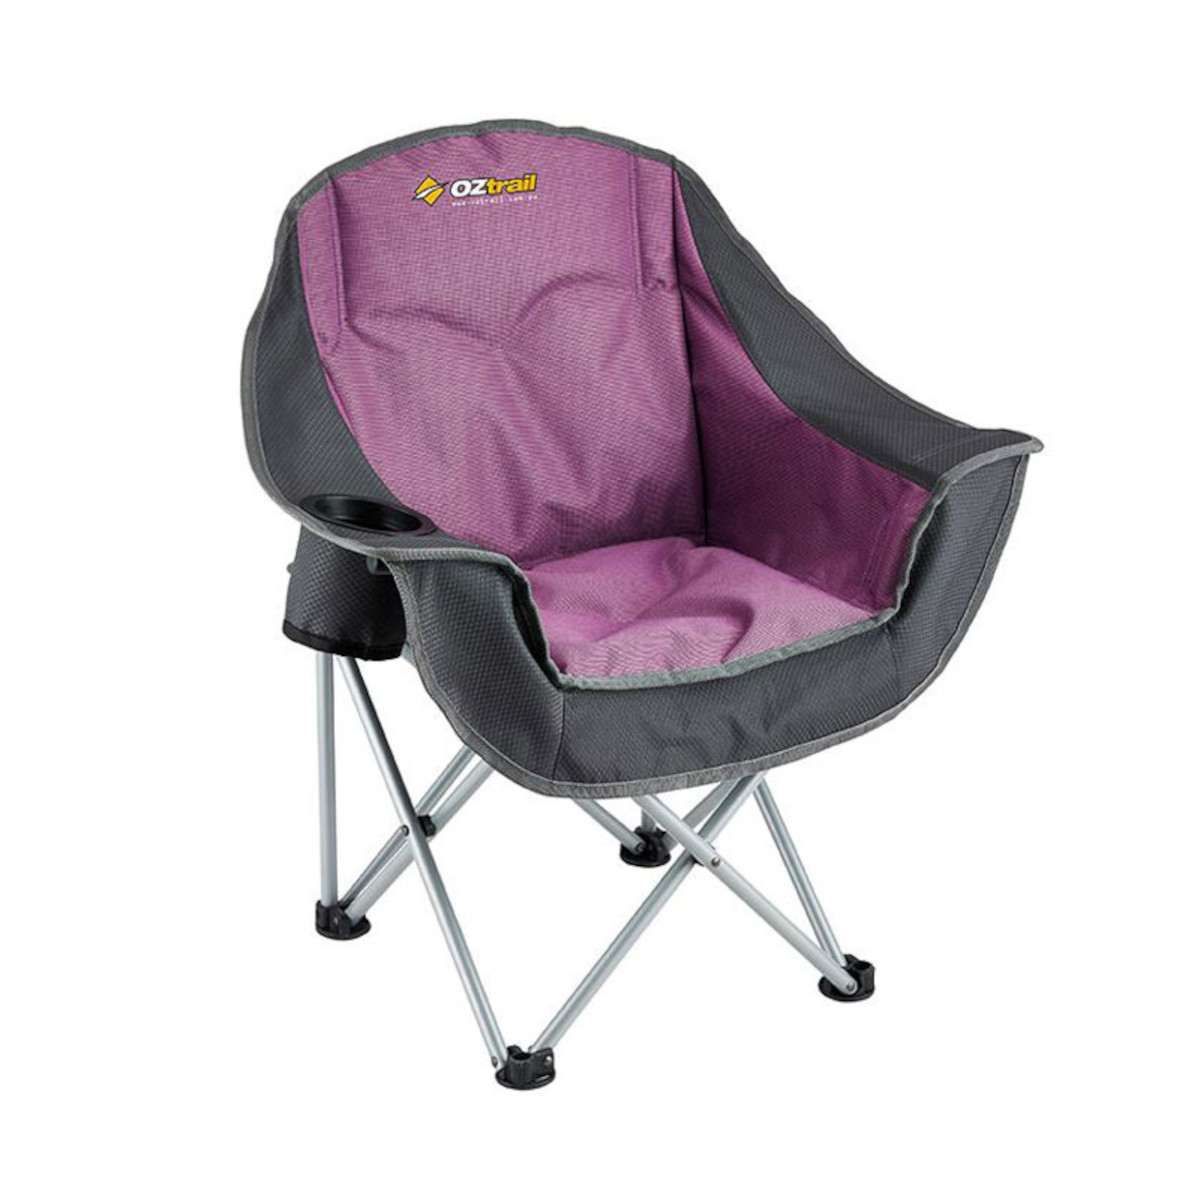 Oztrial Jnr Moon Chair Purple-foldable camp chair